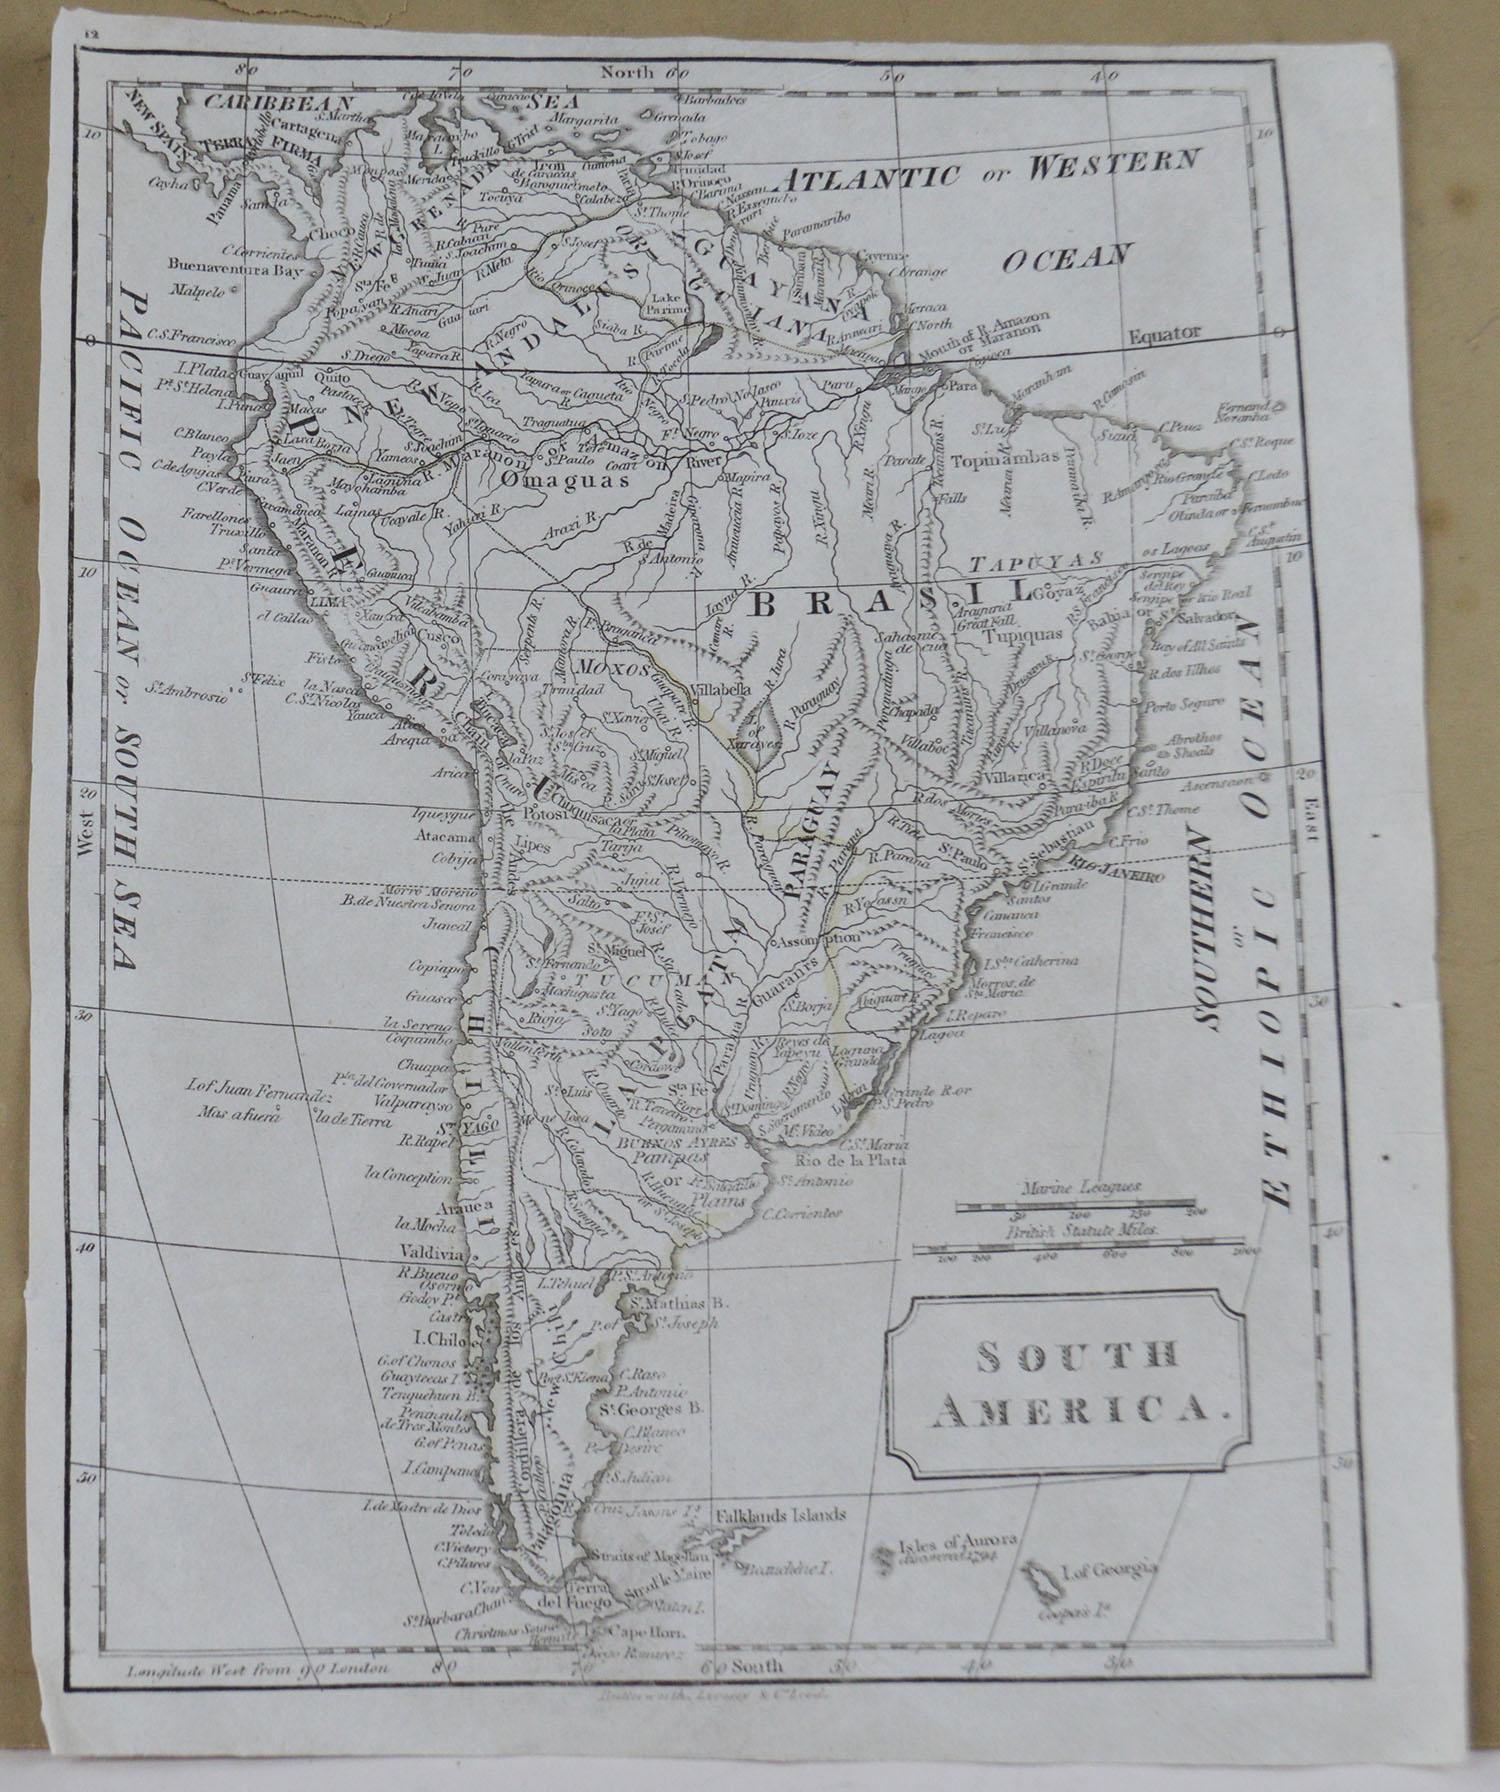 Other Original Antique Map of South America, circa 1830